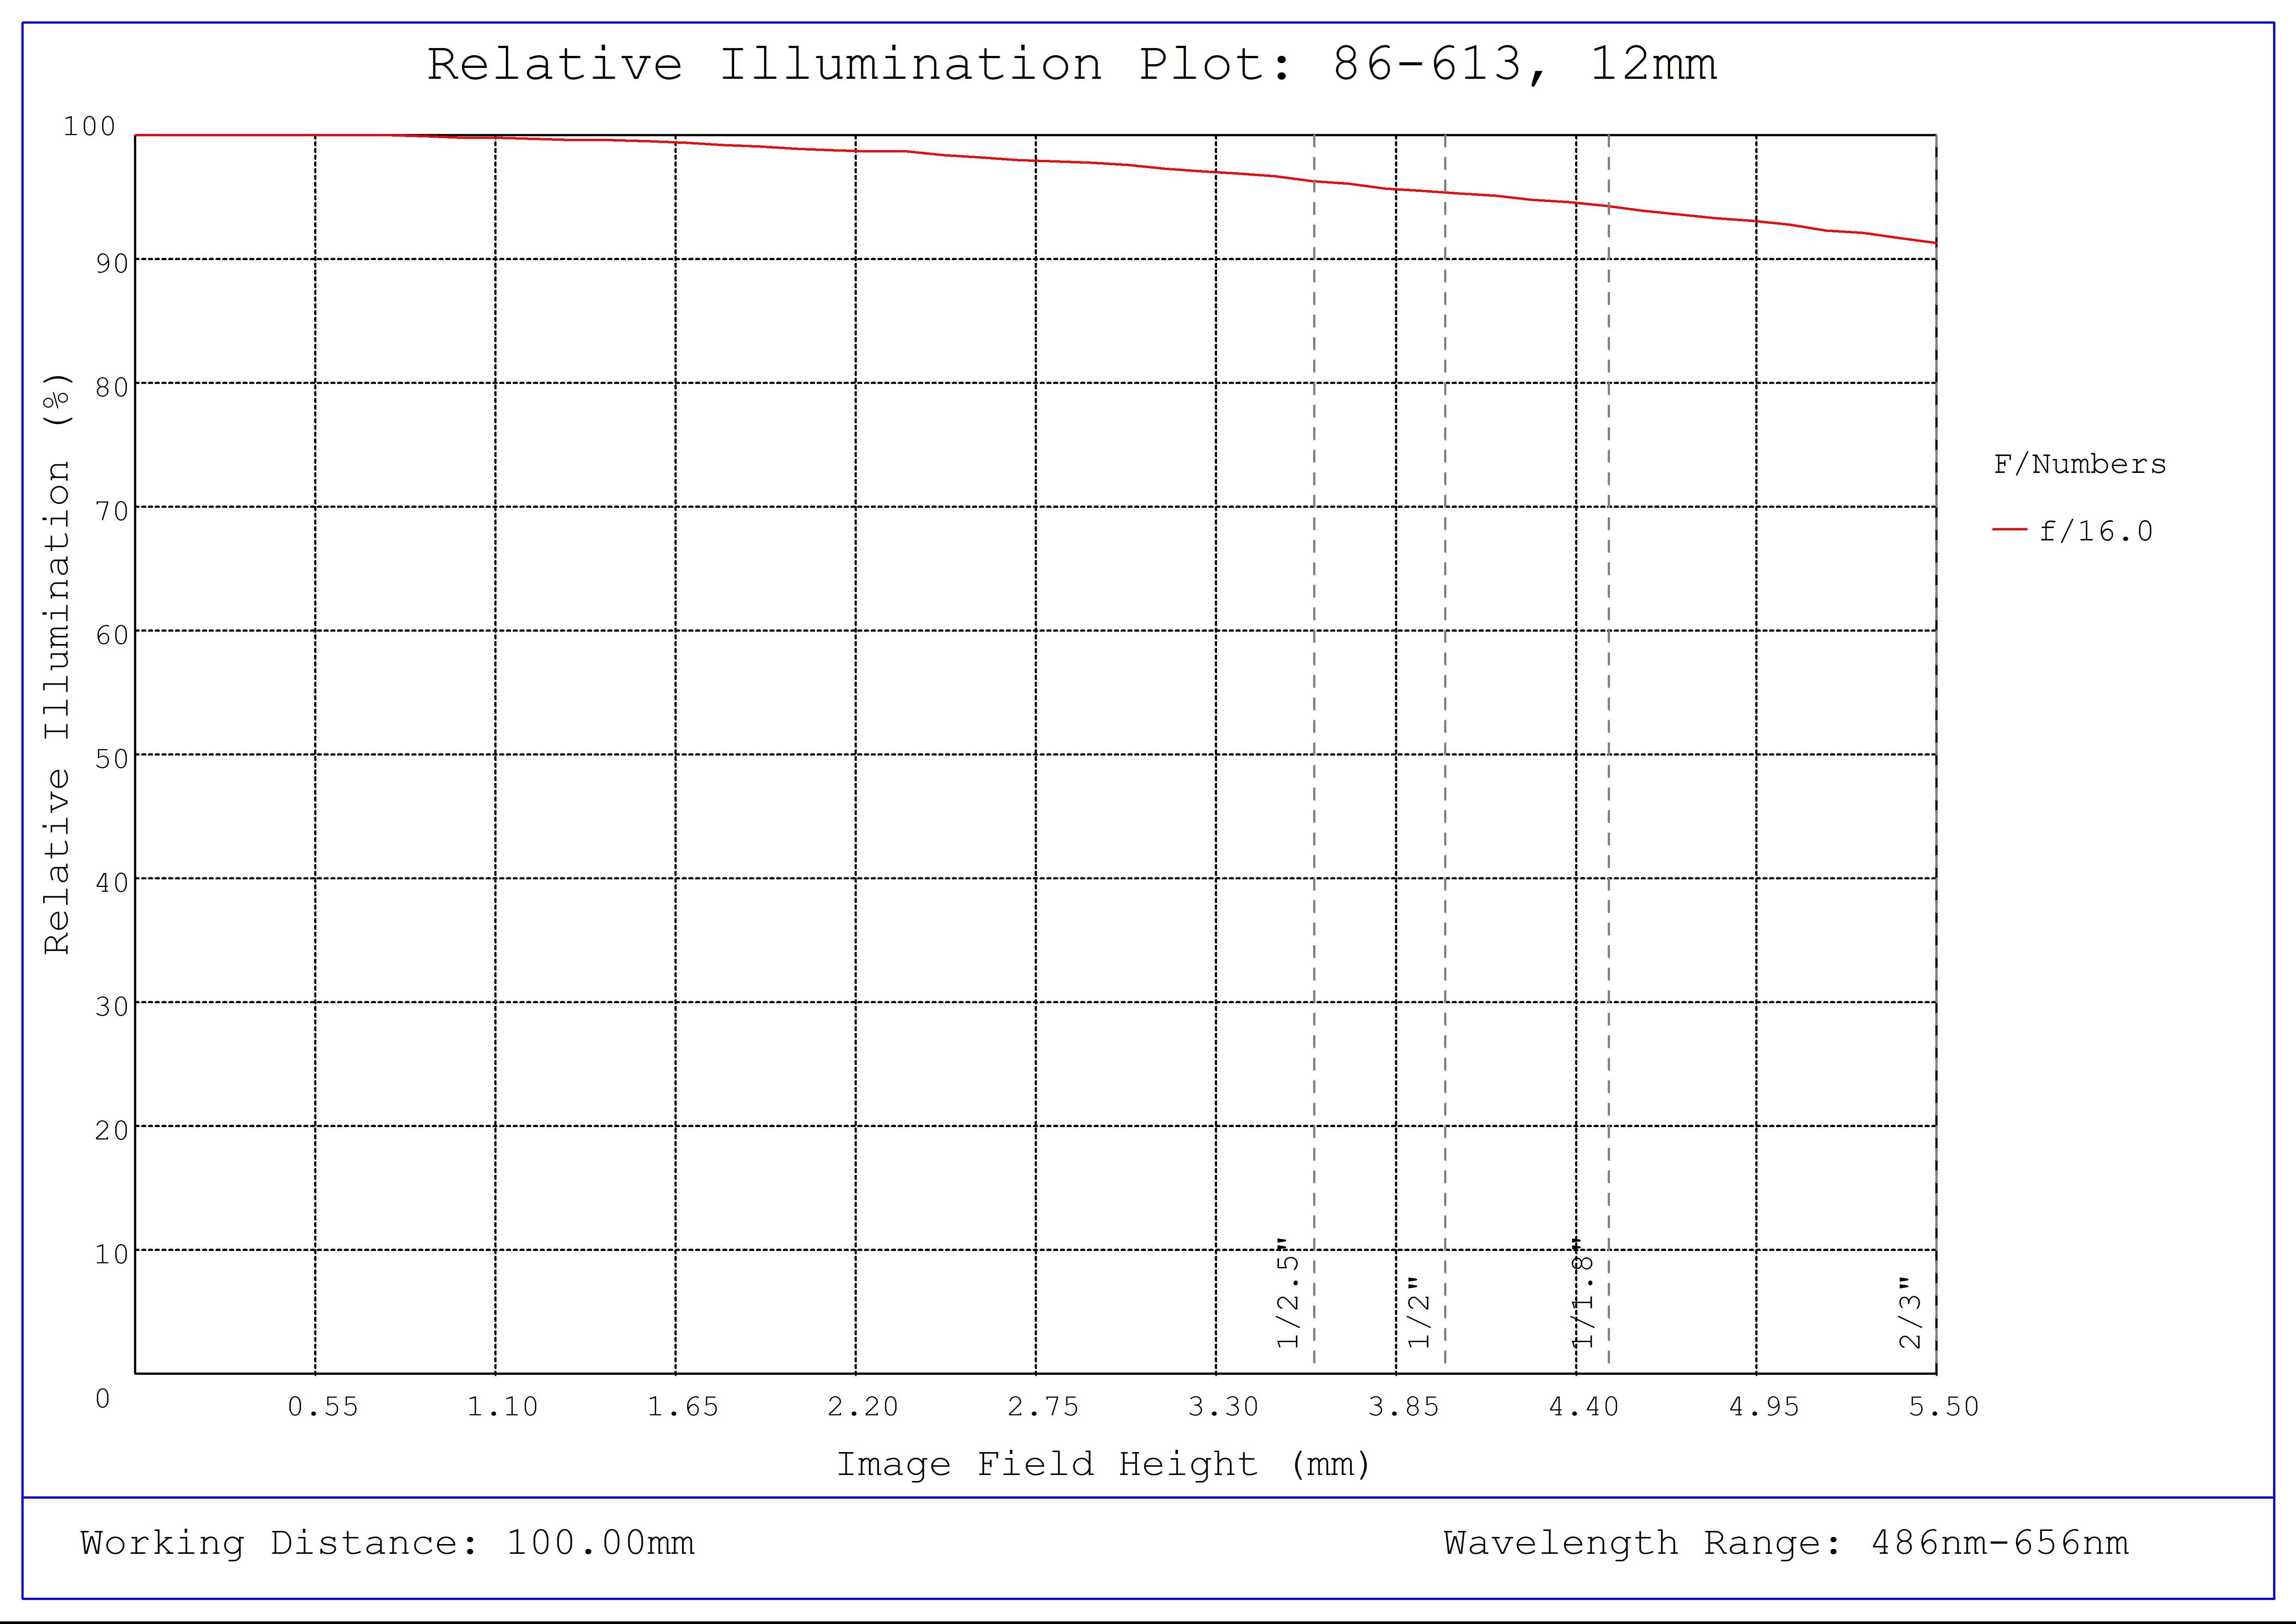 #86-613, 12mm, f/16 Ci Series Fixed Focal Length Lens, Relative Illumination Plot